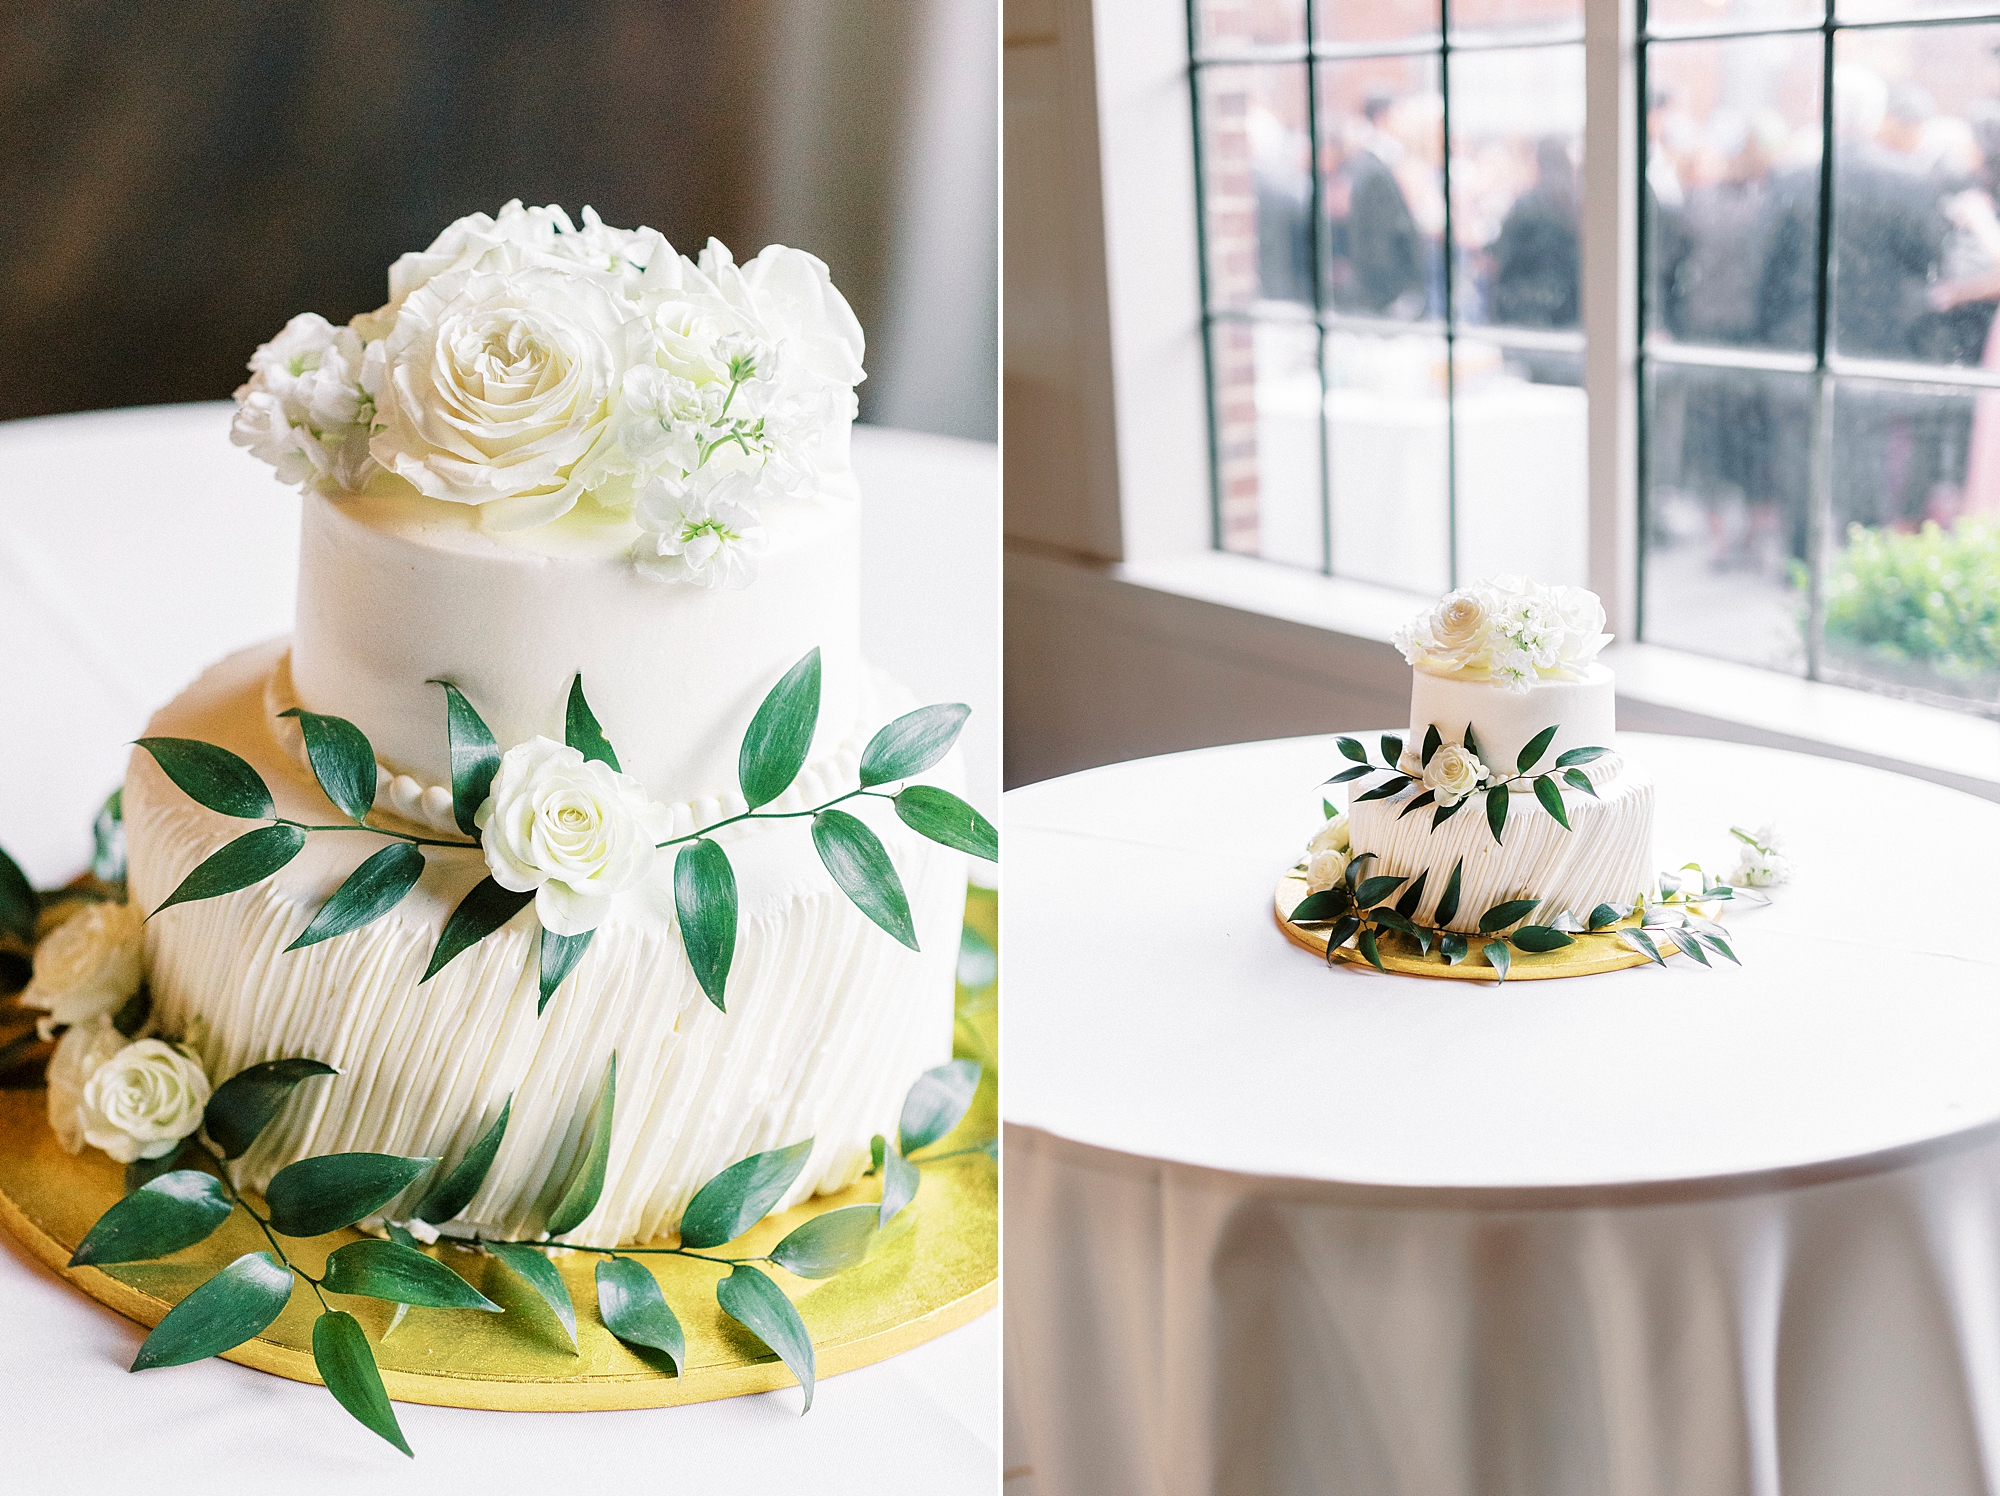 tiered wedding cake with greenery draped around edge